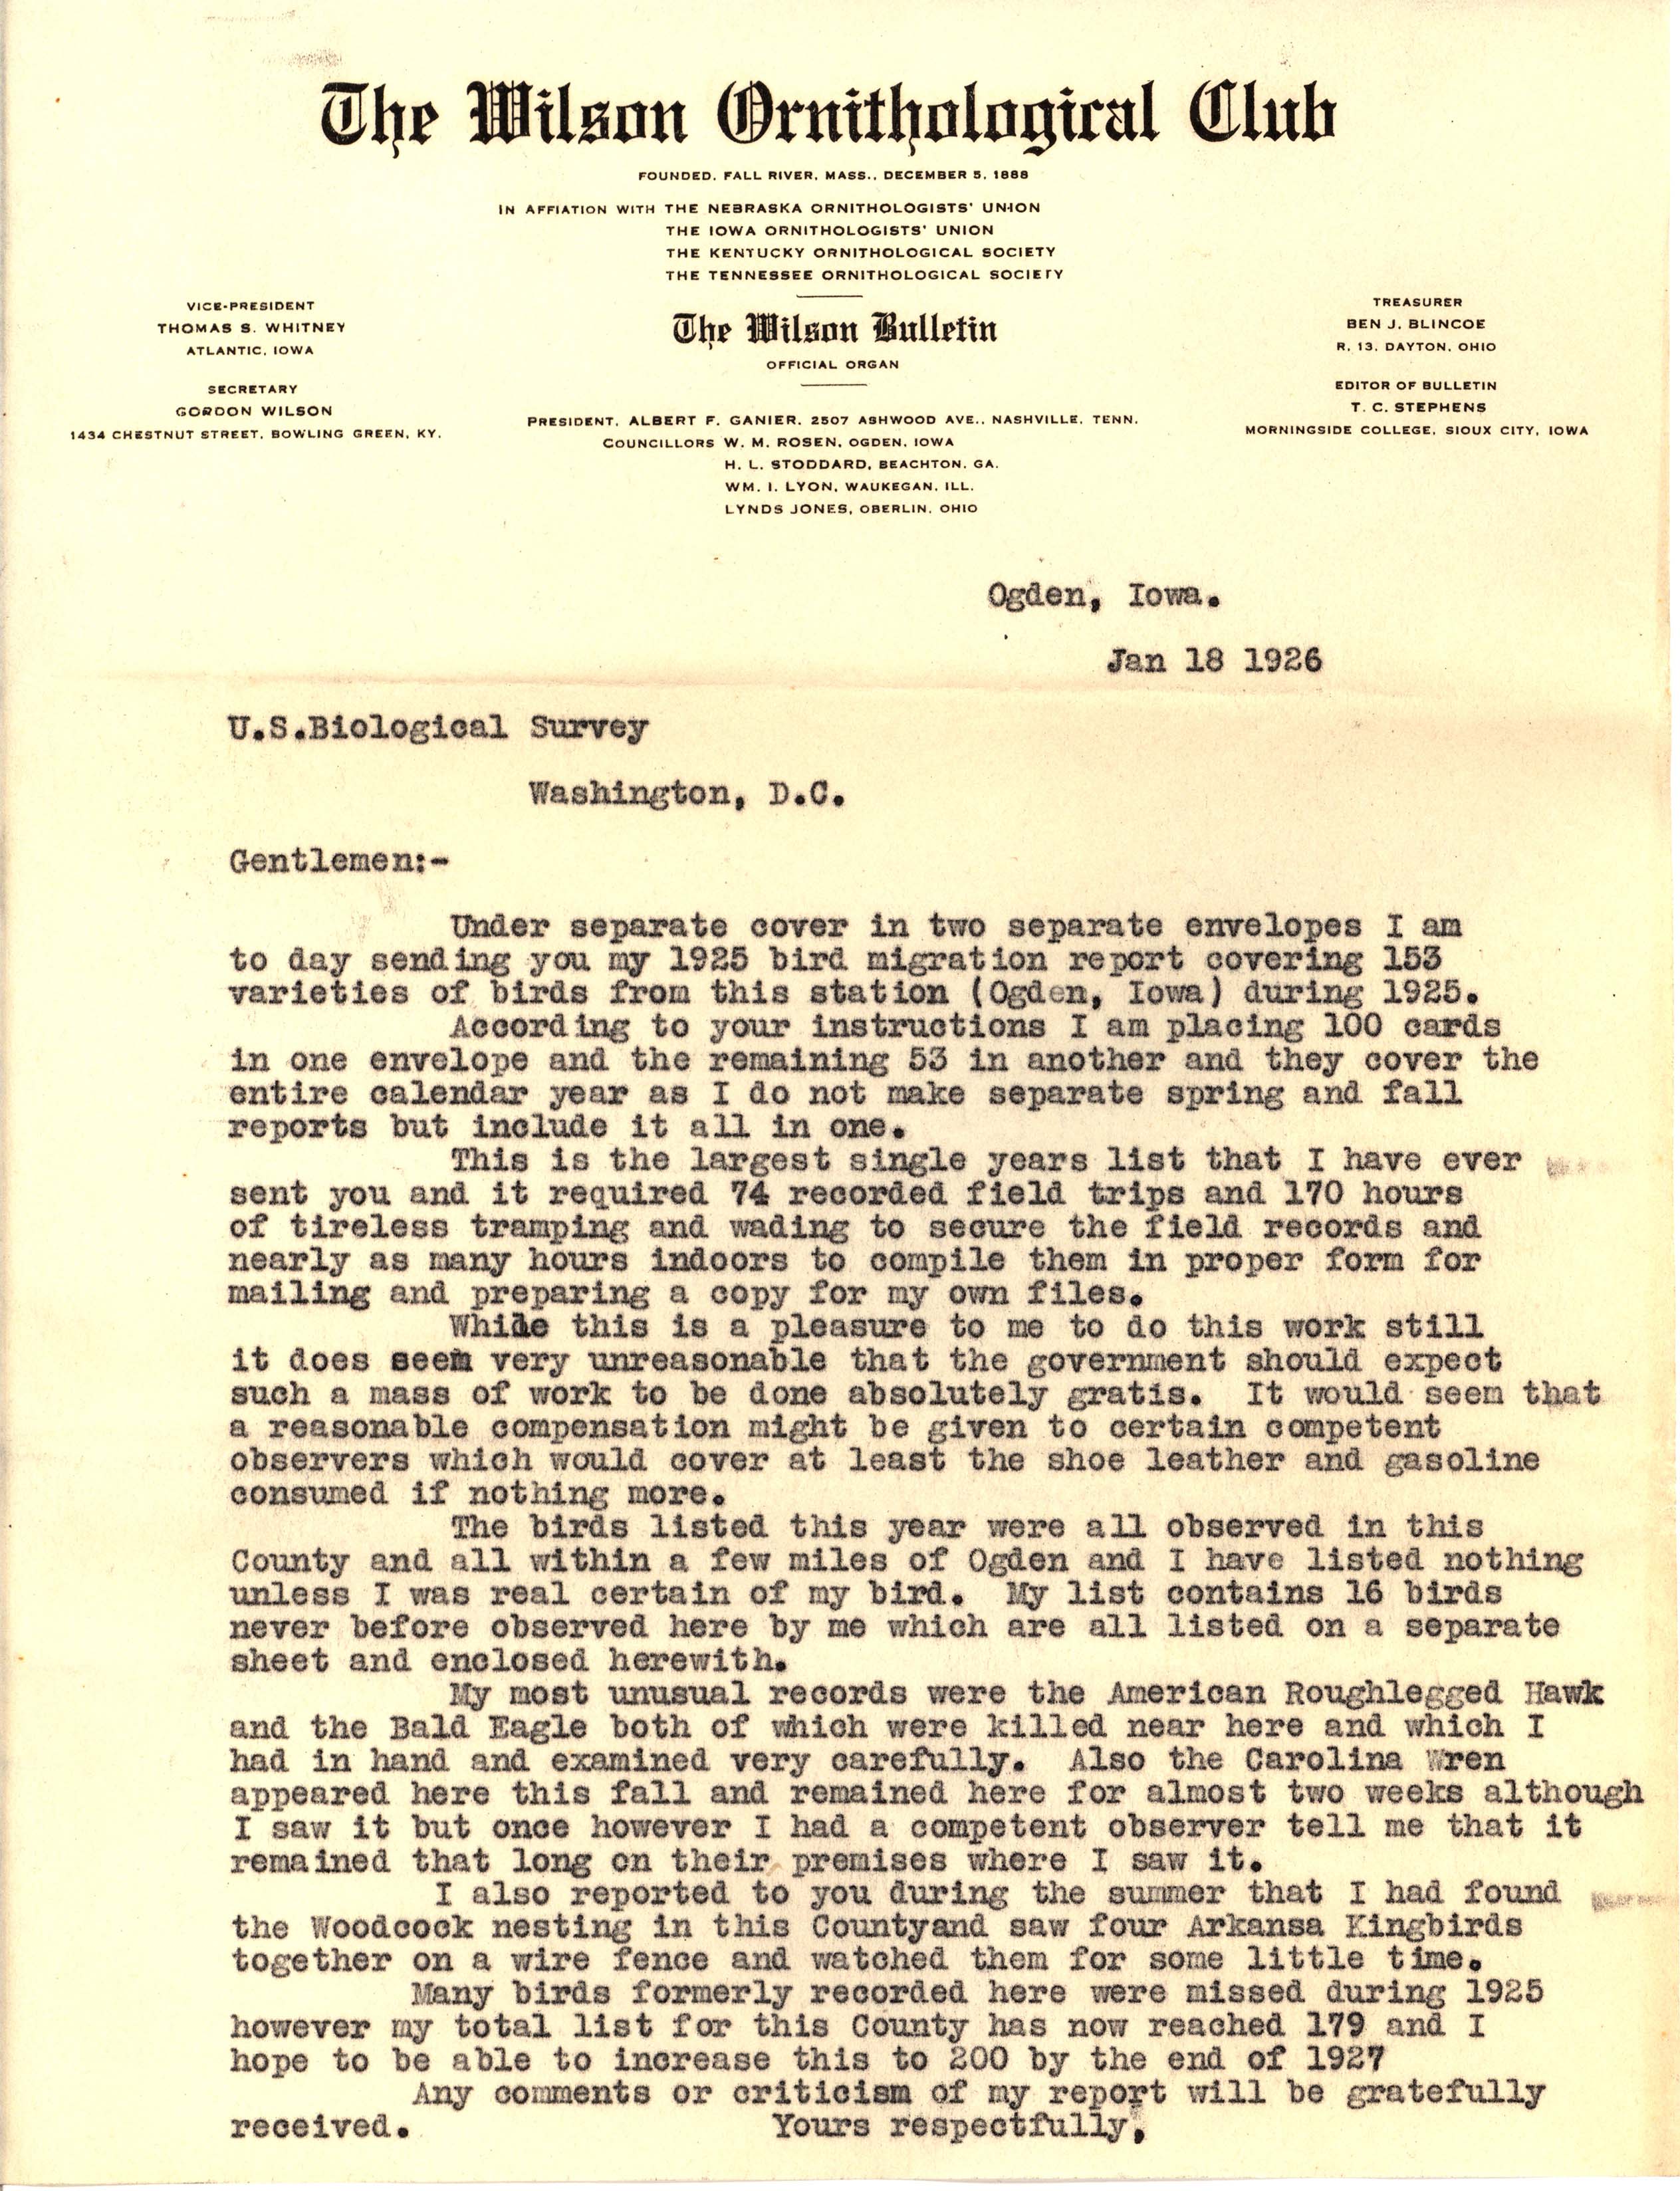 Walter Rosene letter to the United States Bureau of Biological Survey regarding a 1925 bird migration report, January 18, 1926